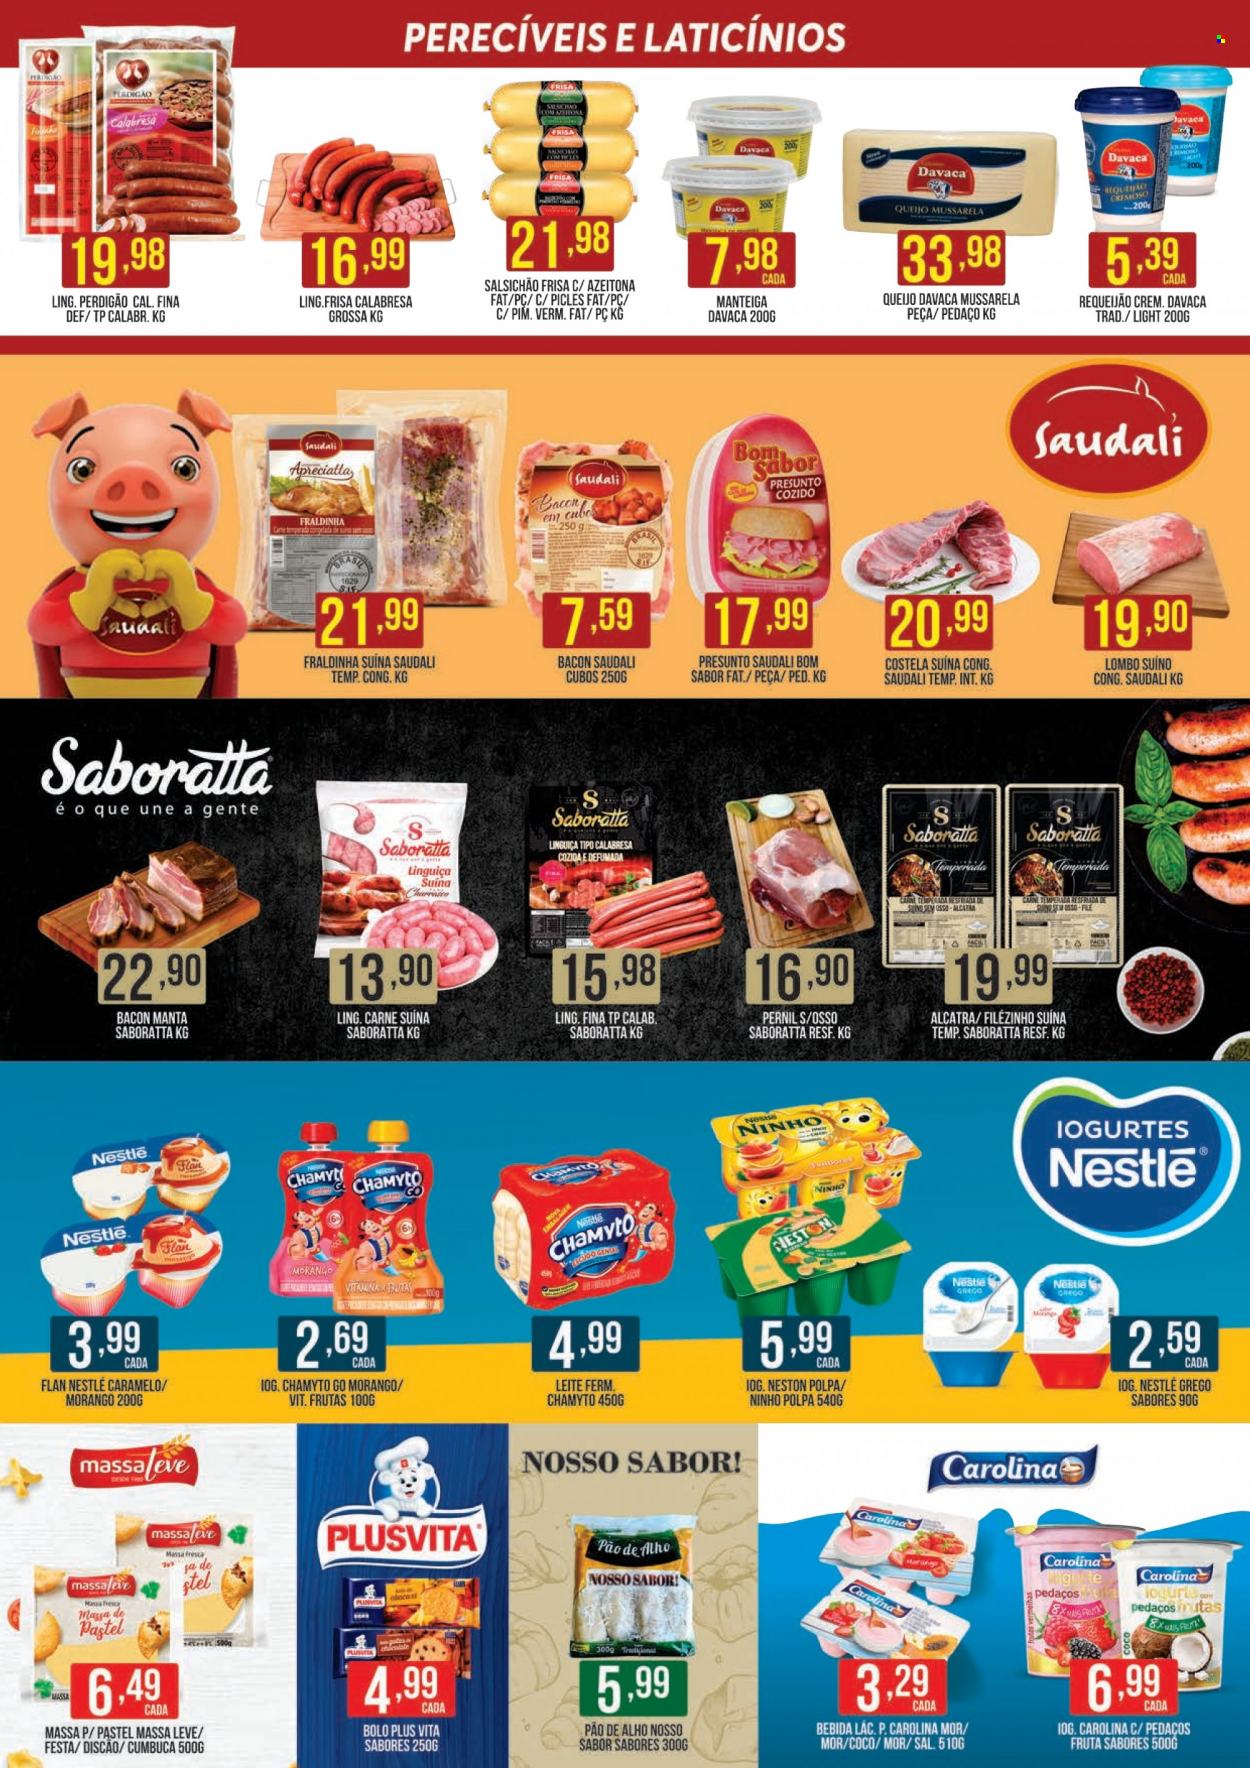 Encarte Casagrande Supermercados  - 04.10.2021 - 17.10.2021.